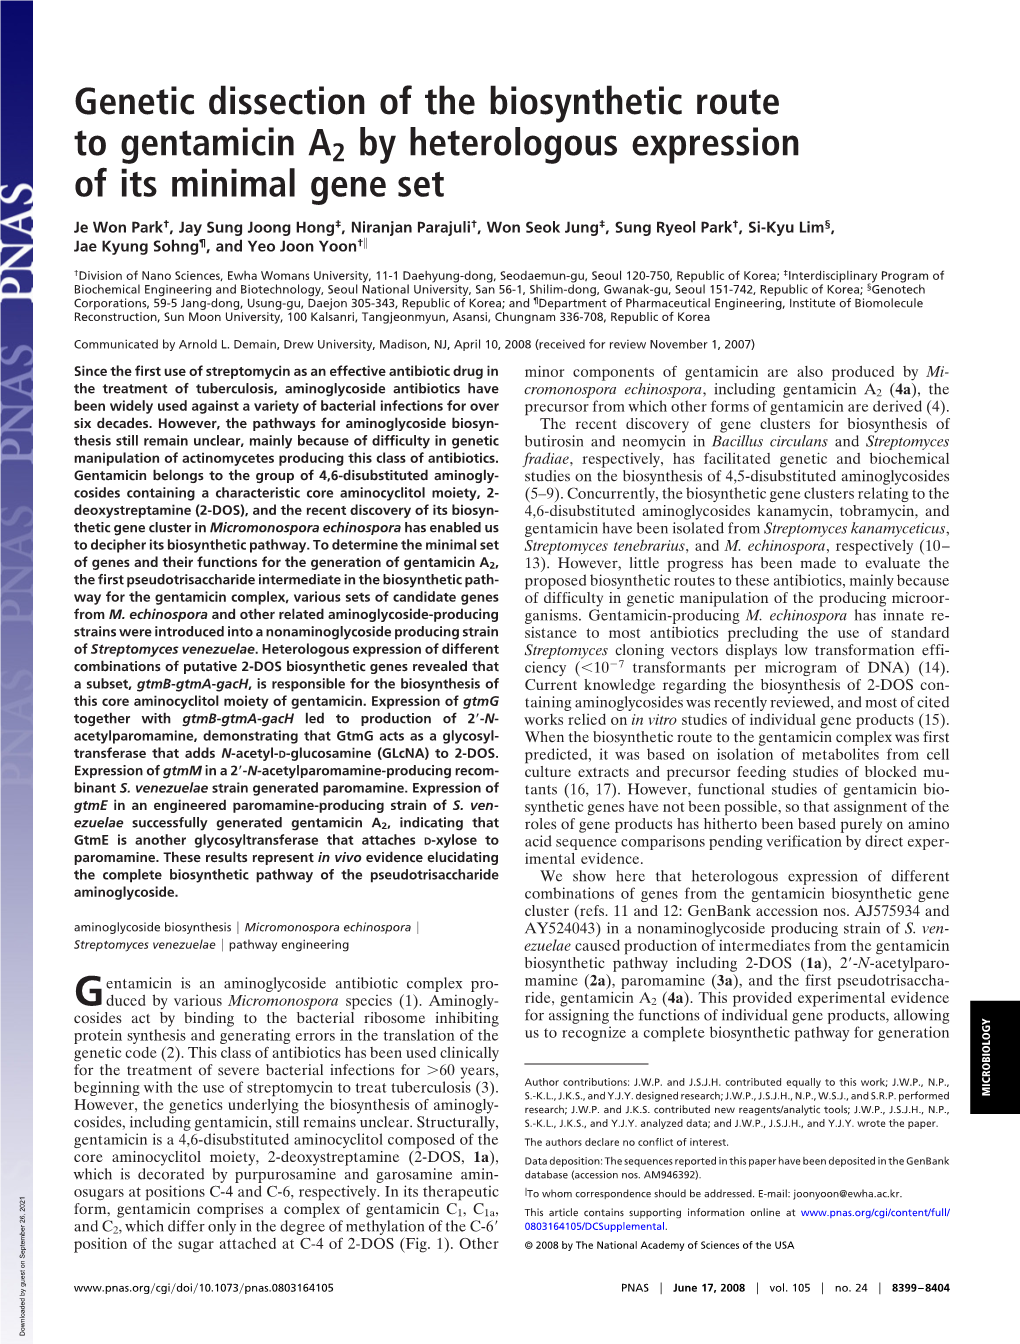 Gentamicin A2 by Heterologous Expression of Its Minimal Gene Set